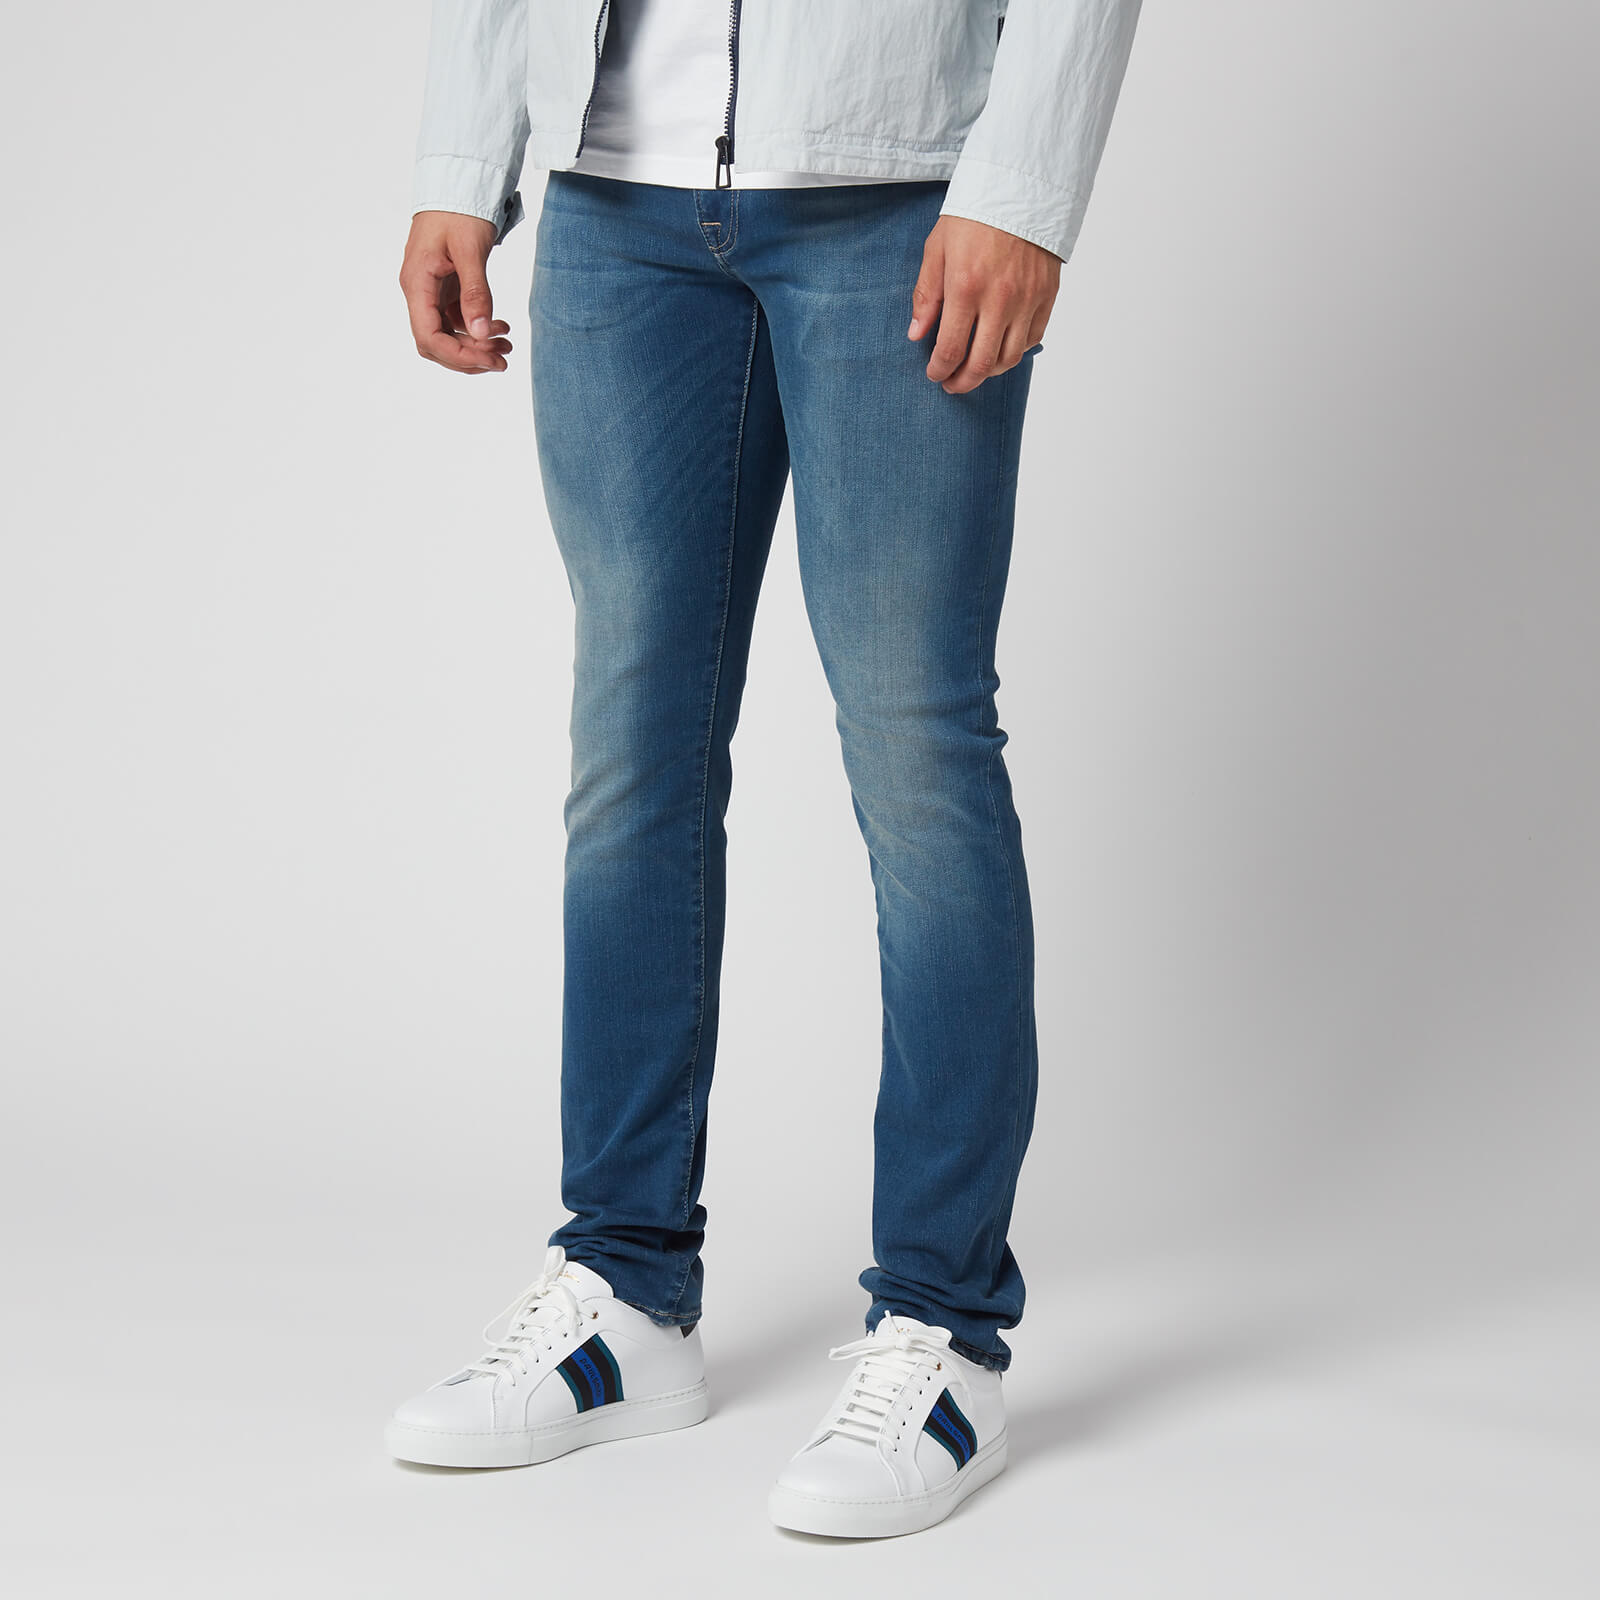 Tramarossa Men's Leonardo Slim 5 Pocket Jeans - 18 Months - W34